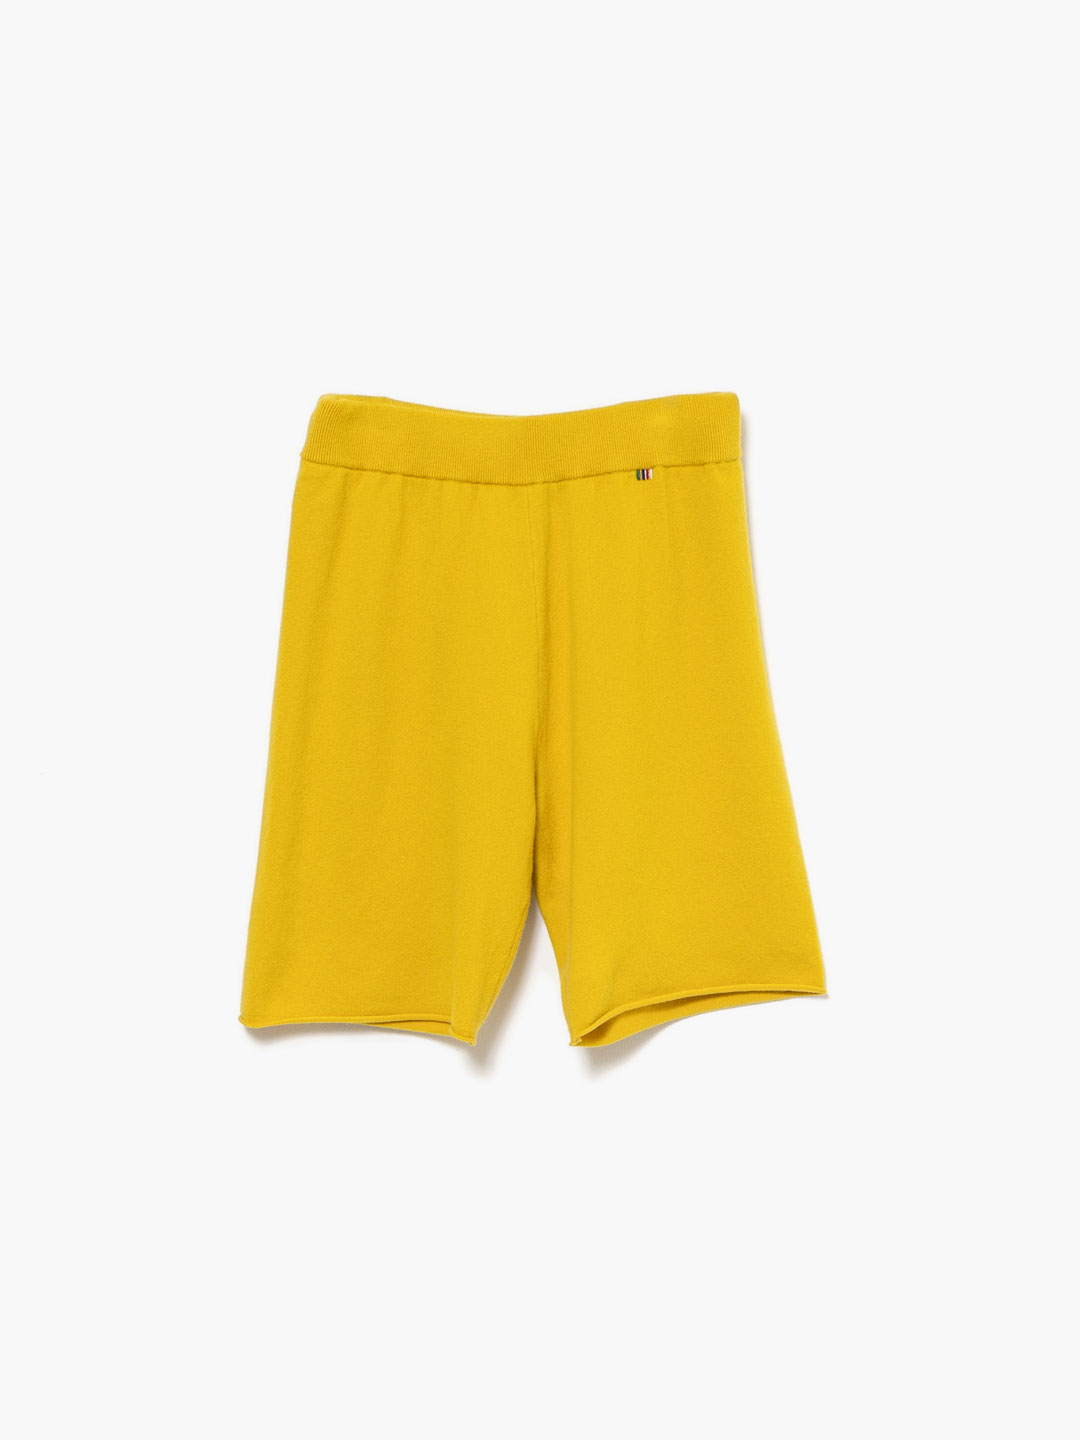 Laufen Shorts - Yellow